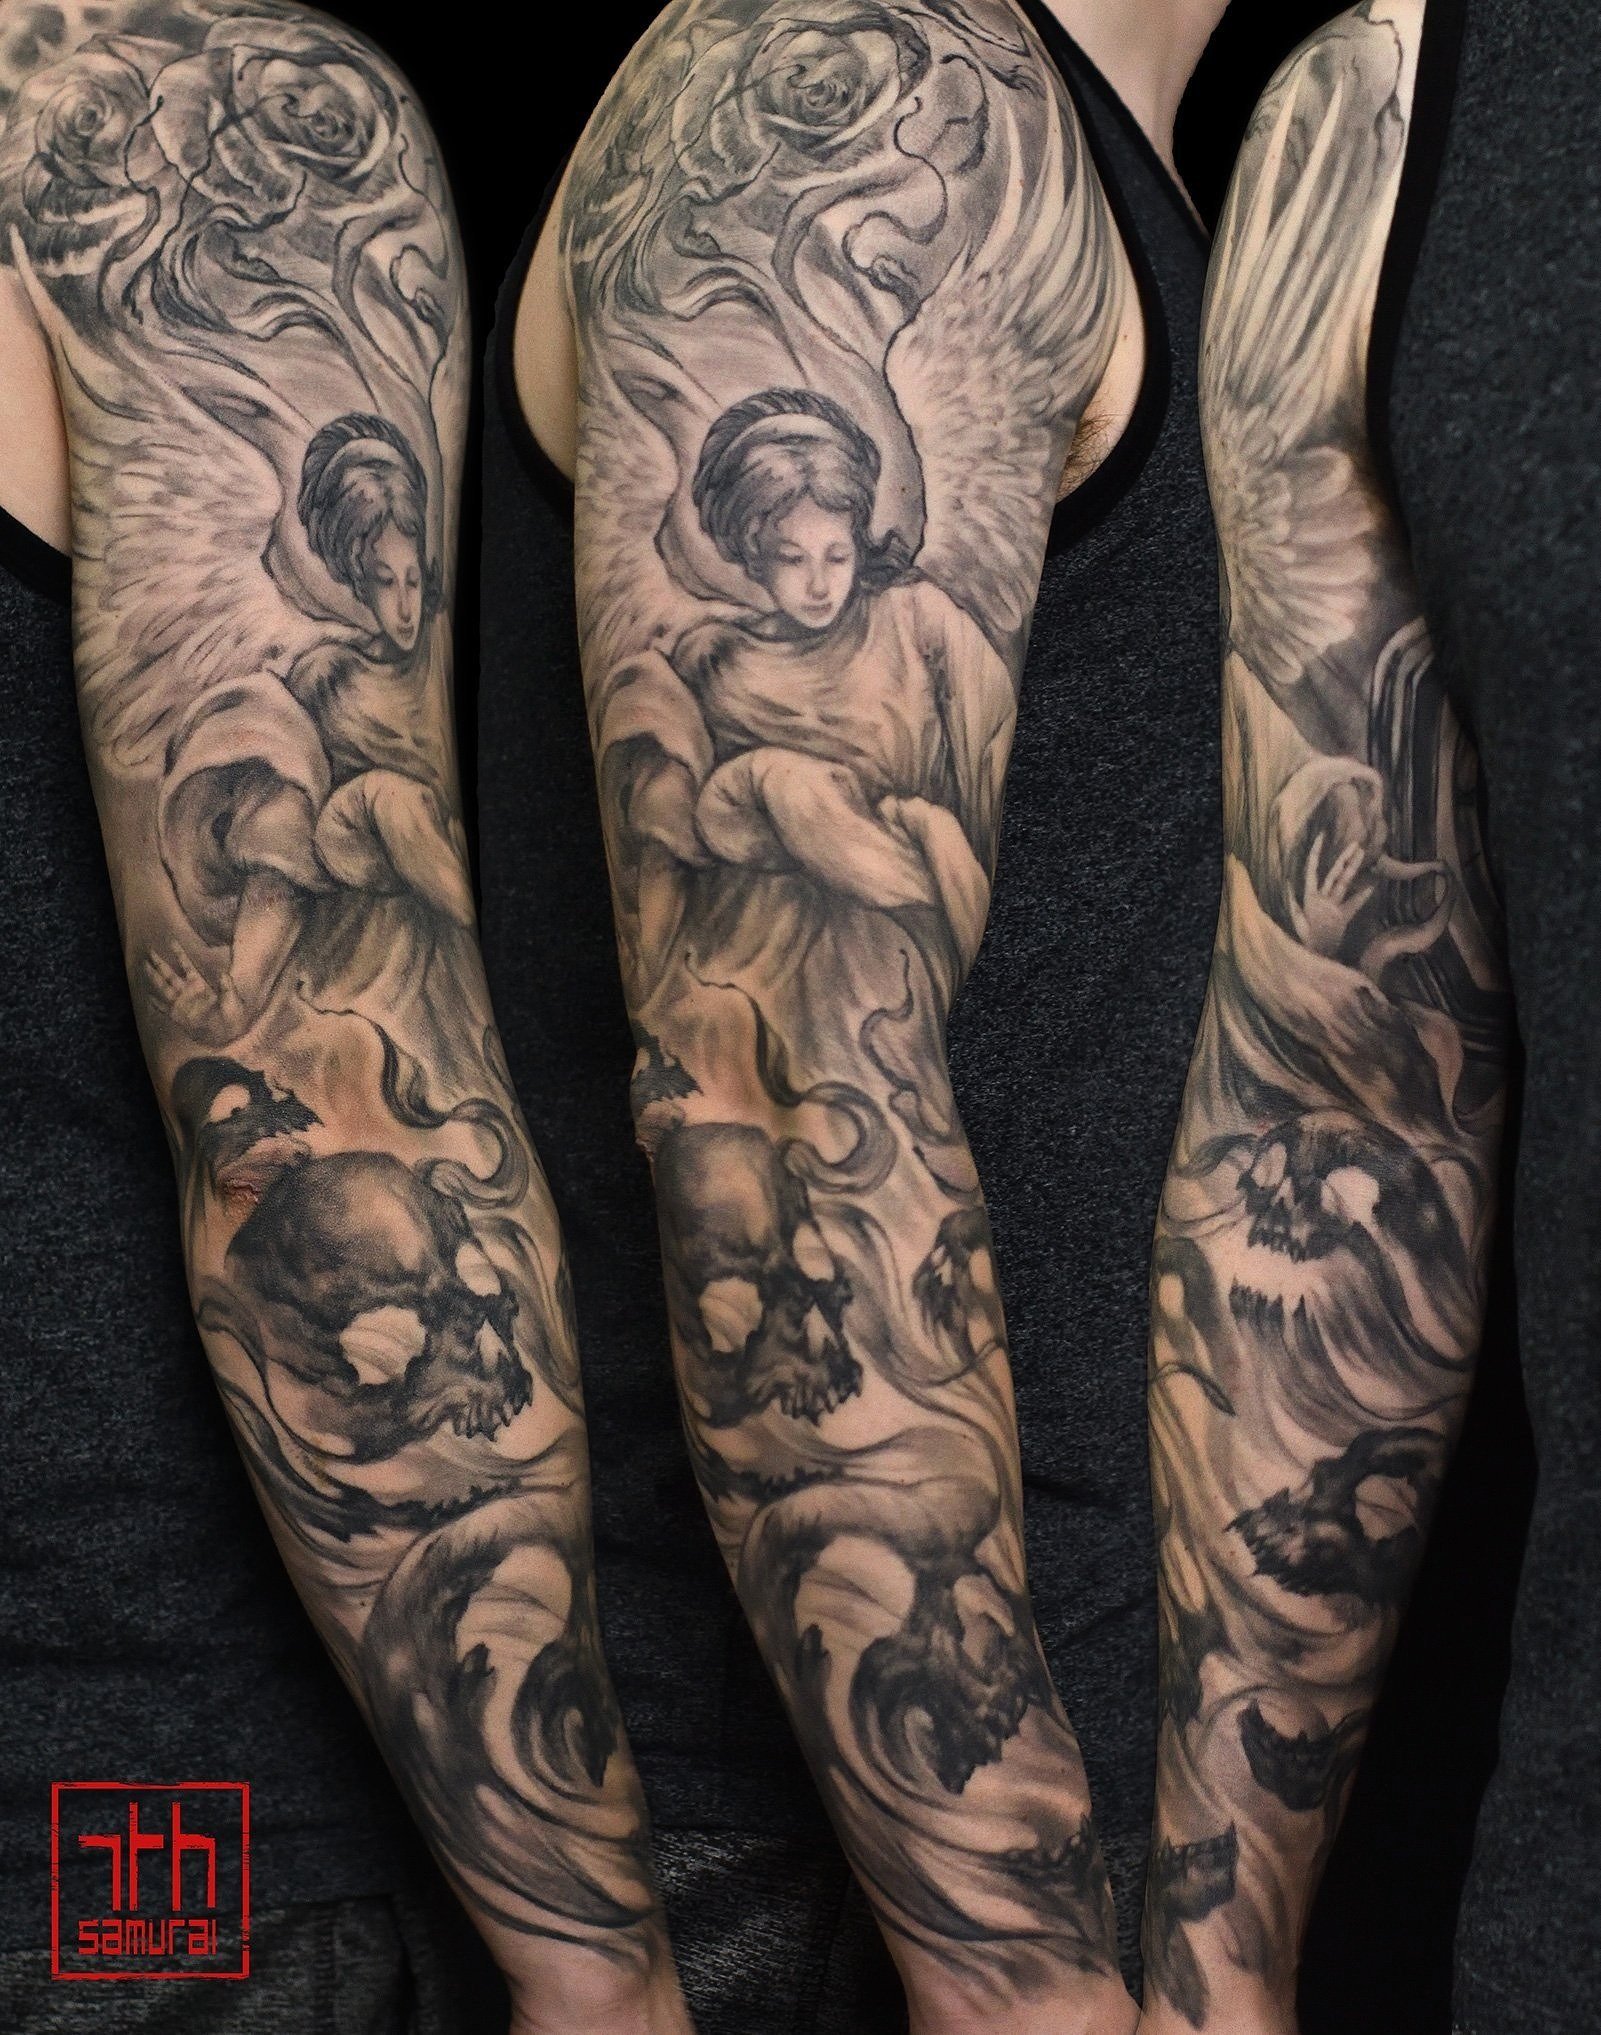 angel warding off  vs skull demons rose clock   Men's religious tattoo sleeve  Tattoo artist: Kai at 7th Samurai. YEG Edmonton, Alberta, Canada) best 2020 